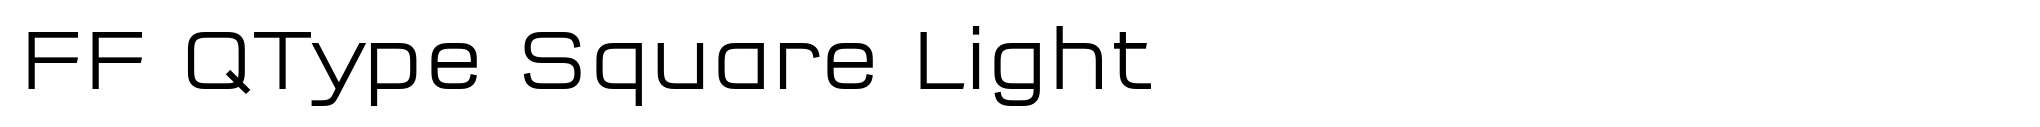 FF QType Square Light image